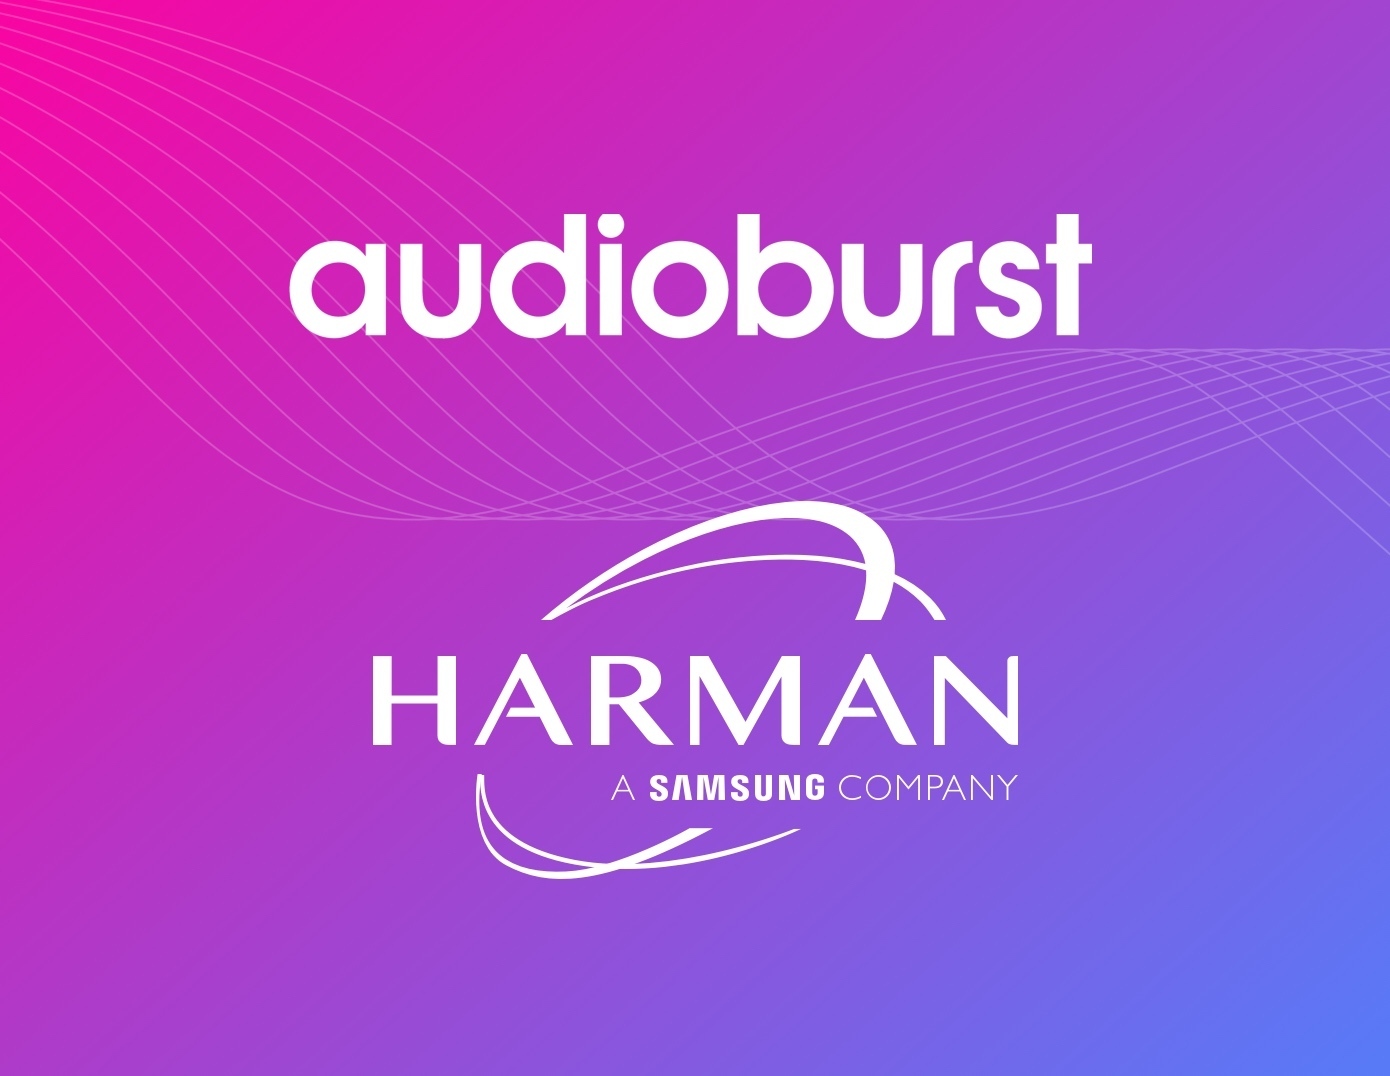 Audioburst Harman